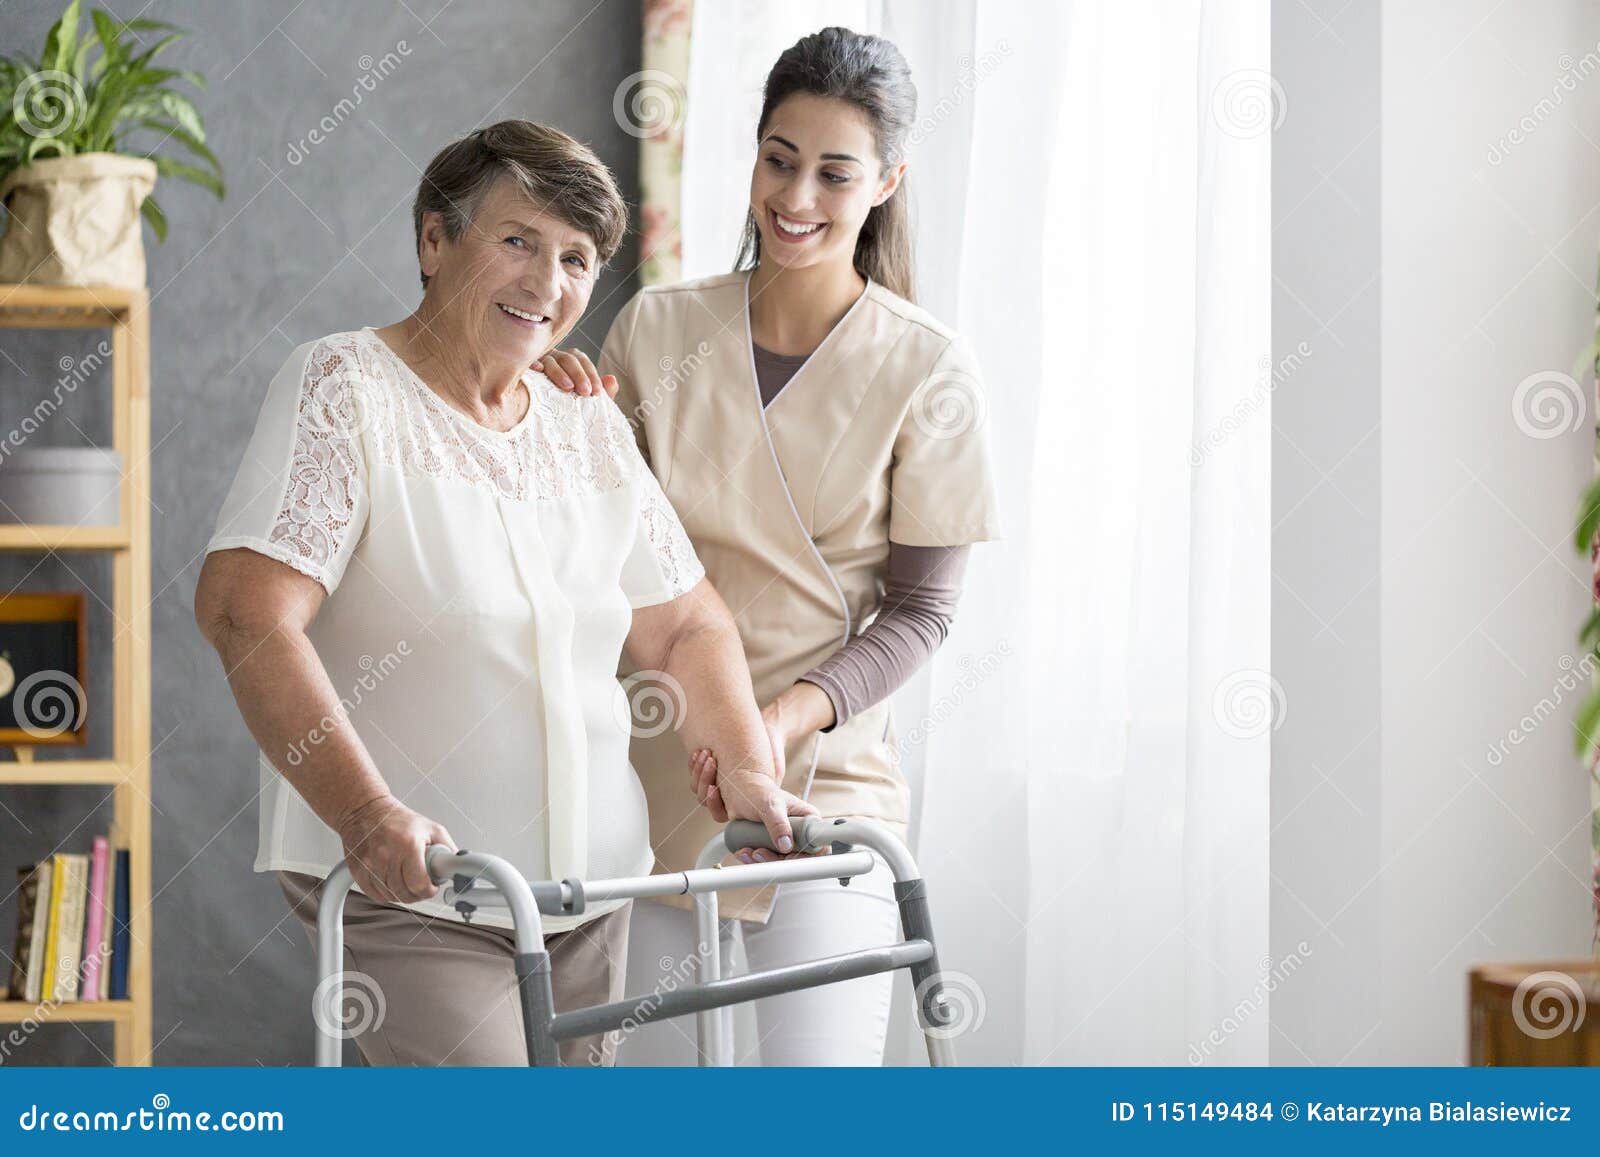 pensioner and nurse